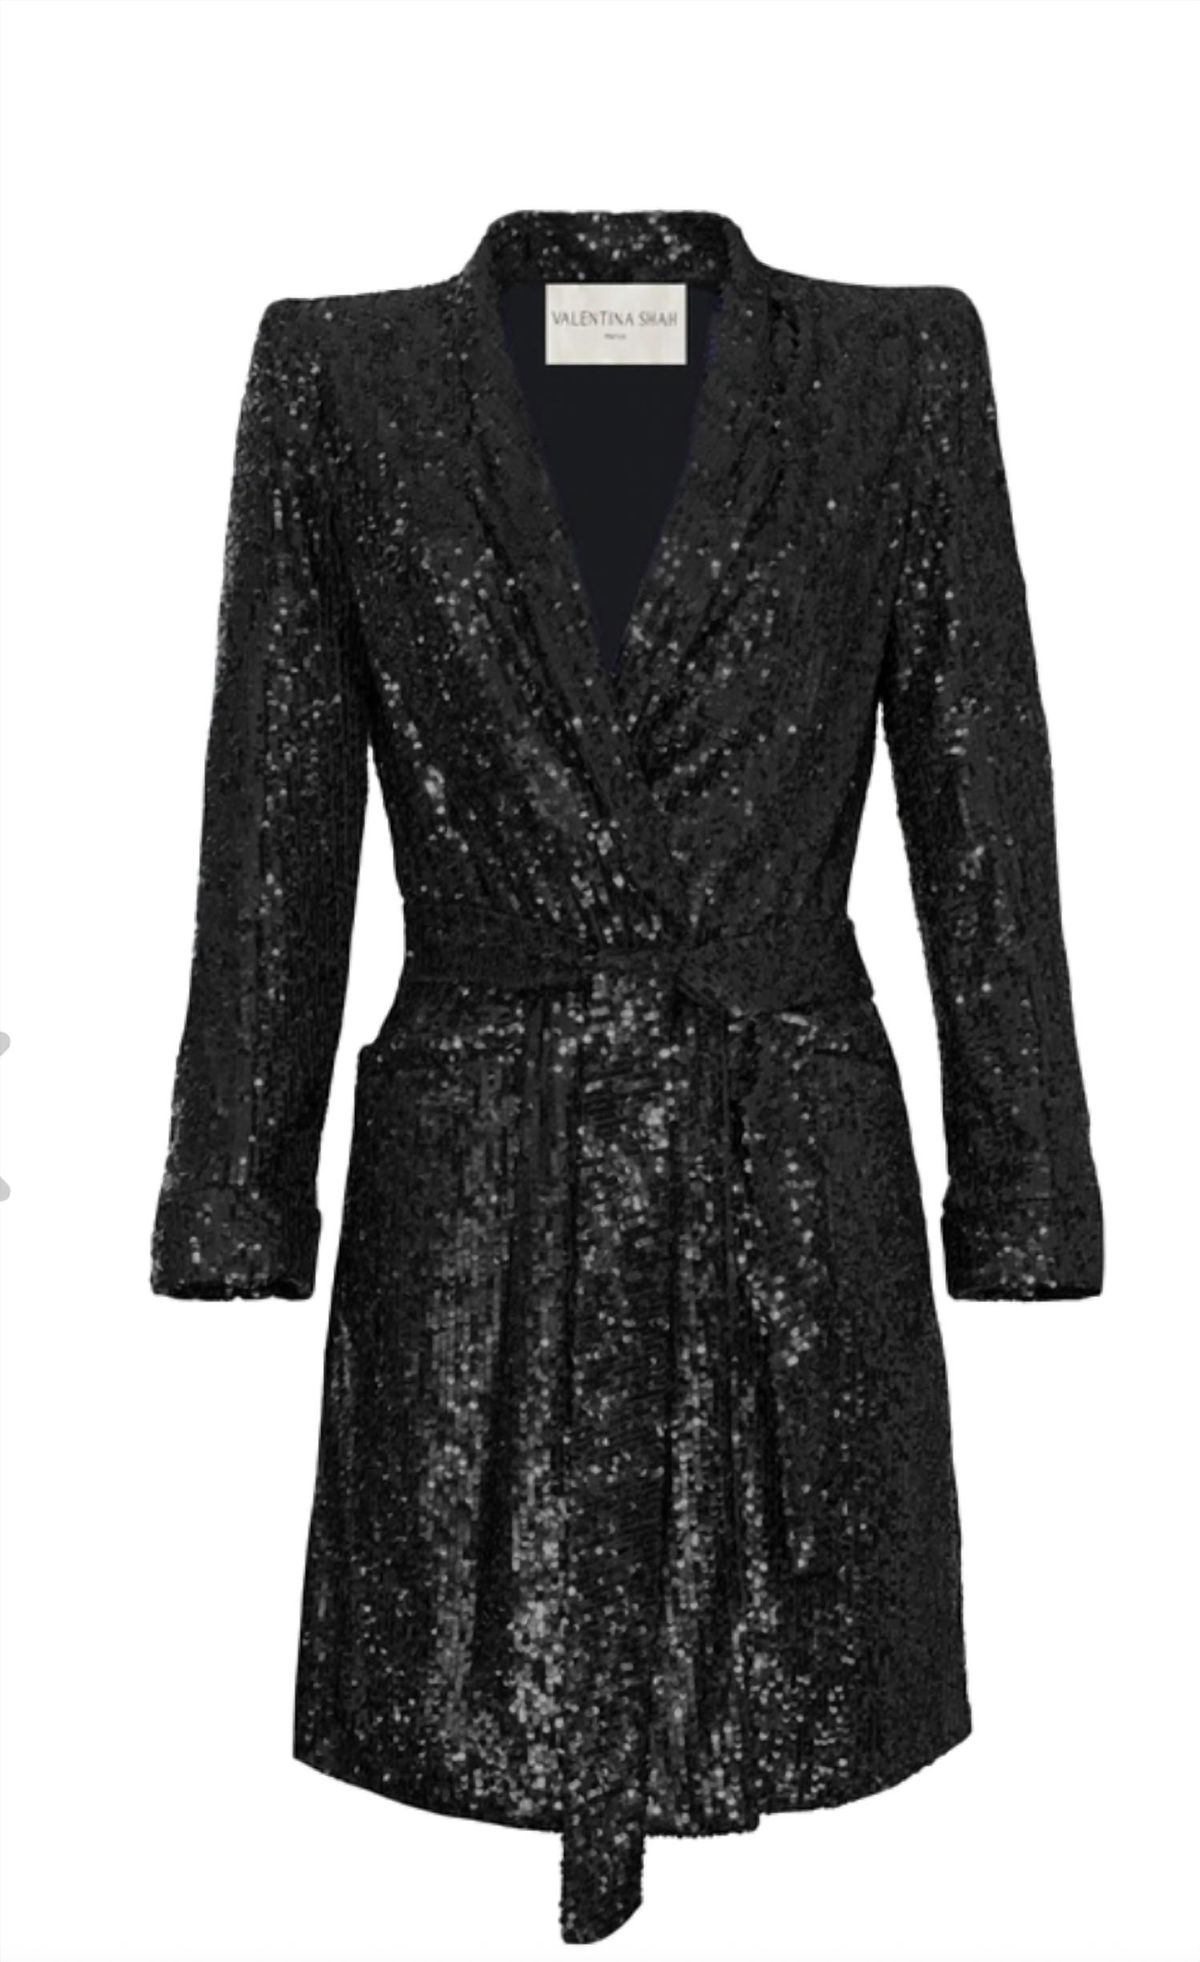 Style 1-2494254393-98 Valentina Shah Size 10 Blazer Black Cocktail Dress on Queenly